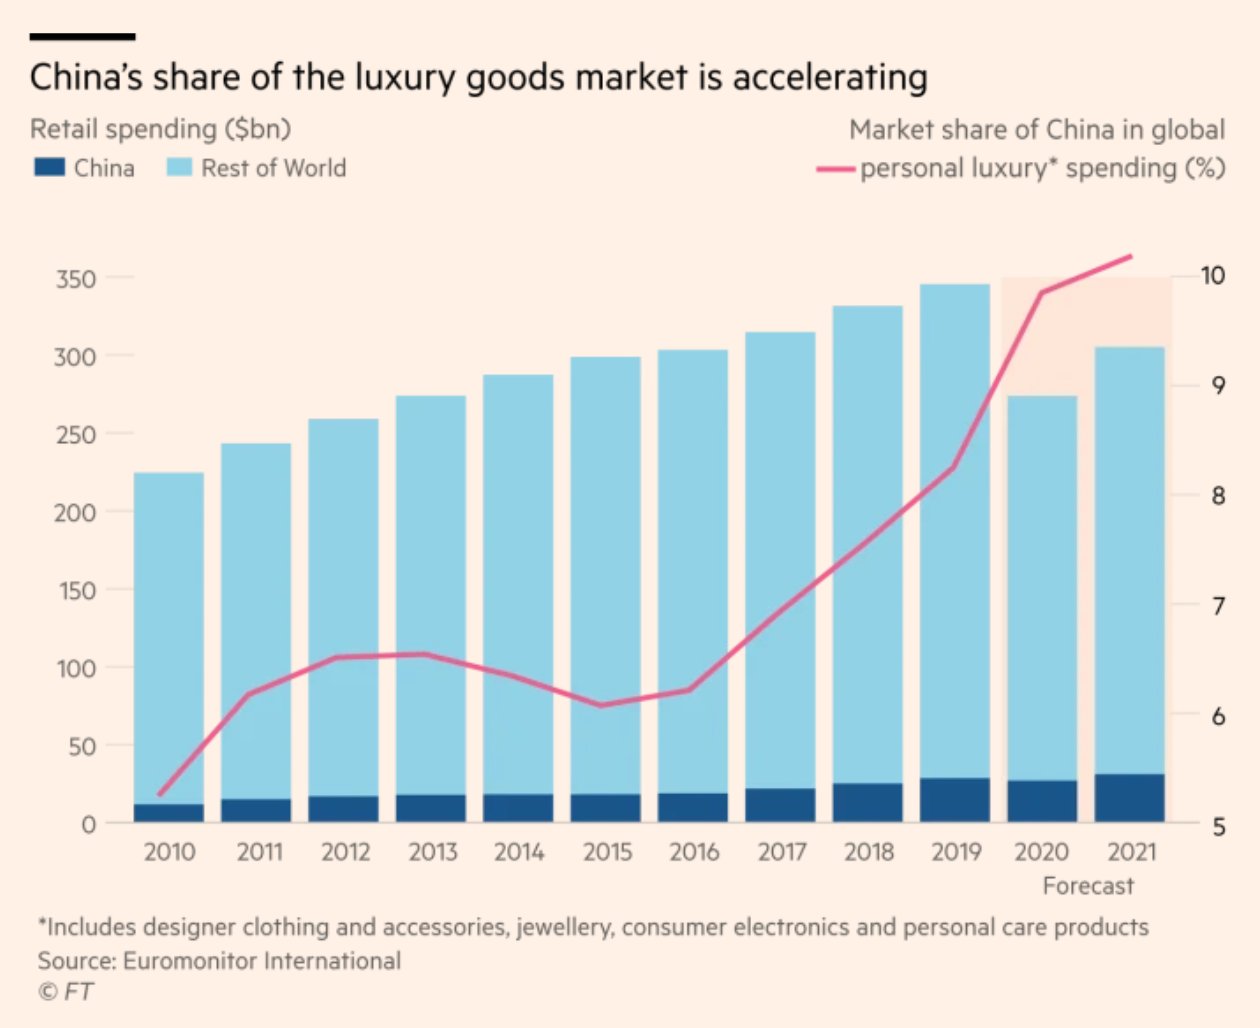 luxury brand market share